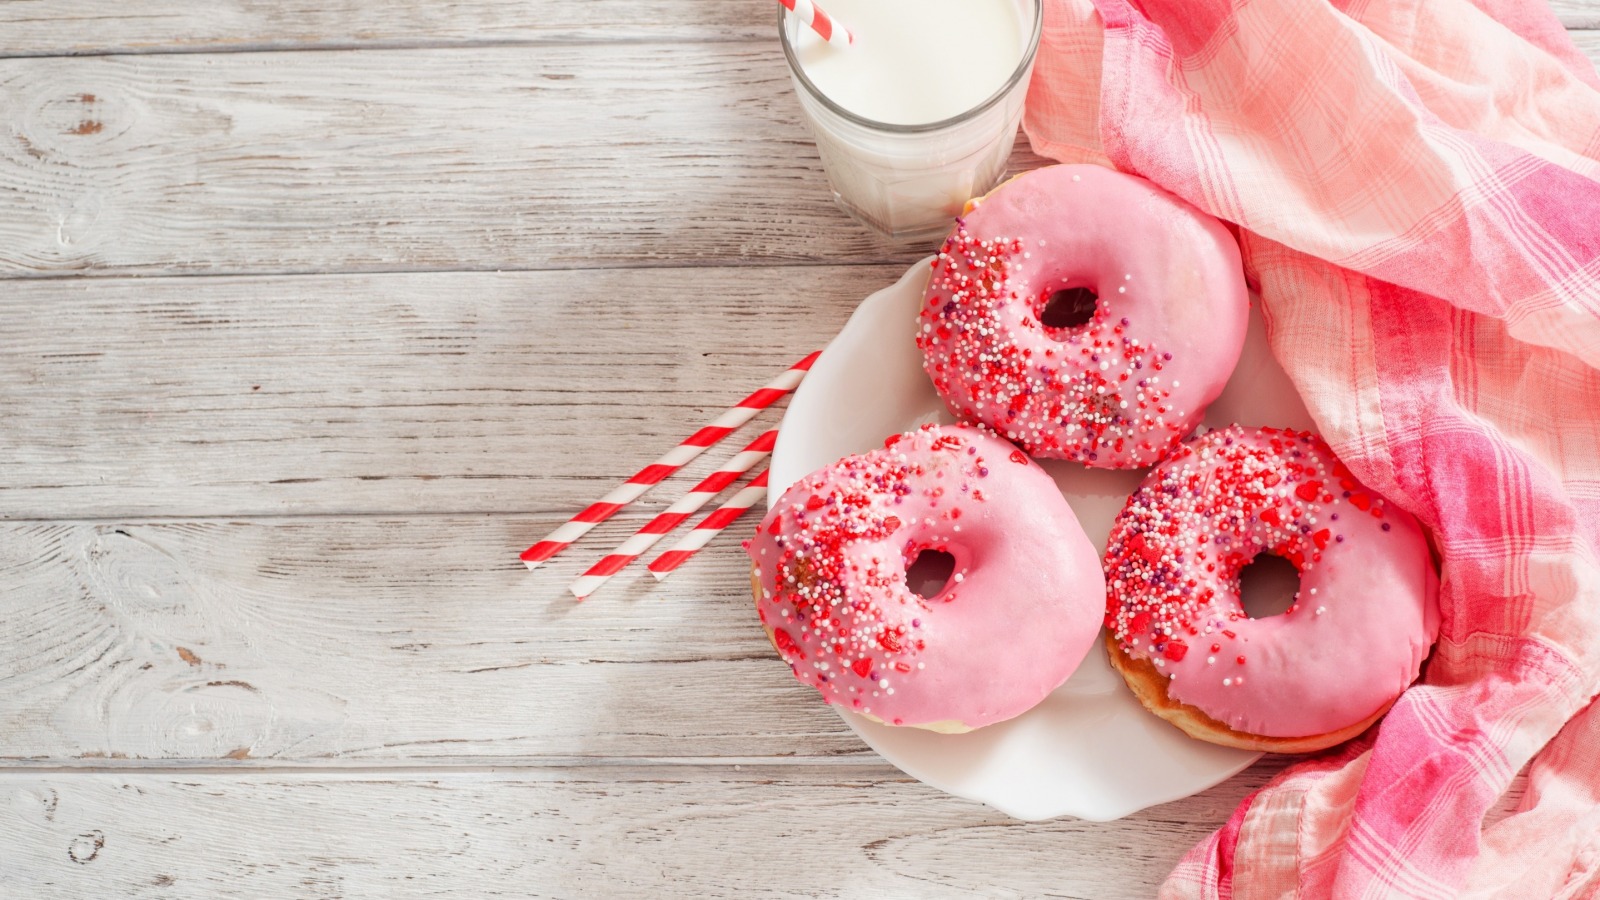 Donuts - Food Wallpaper (40448626) - Fanpop